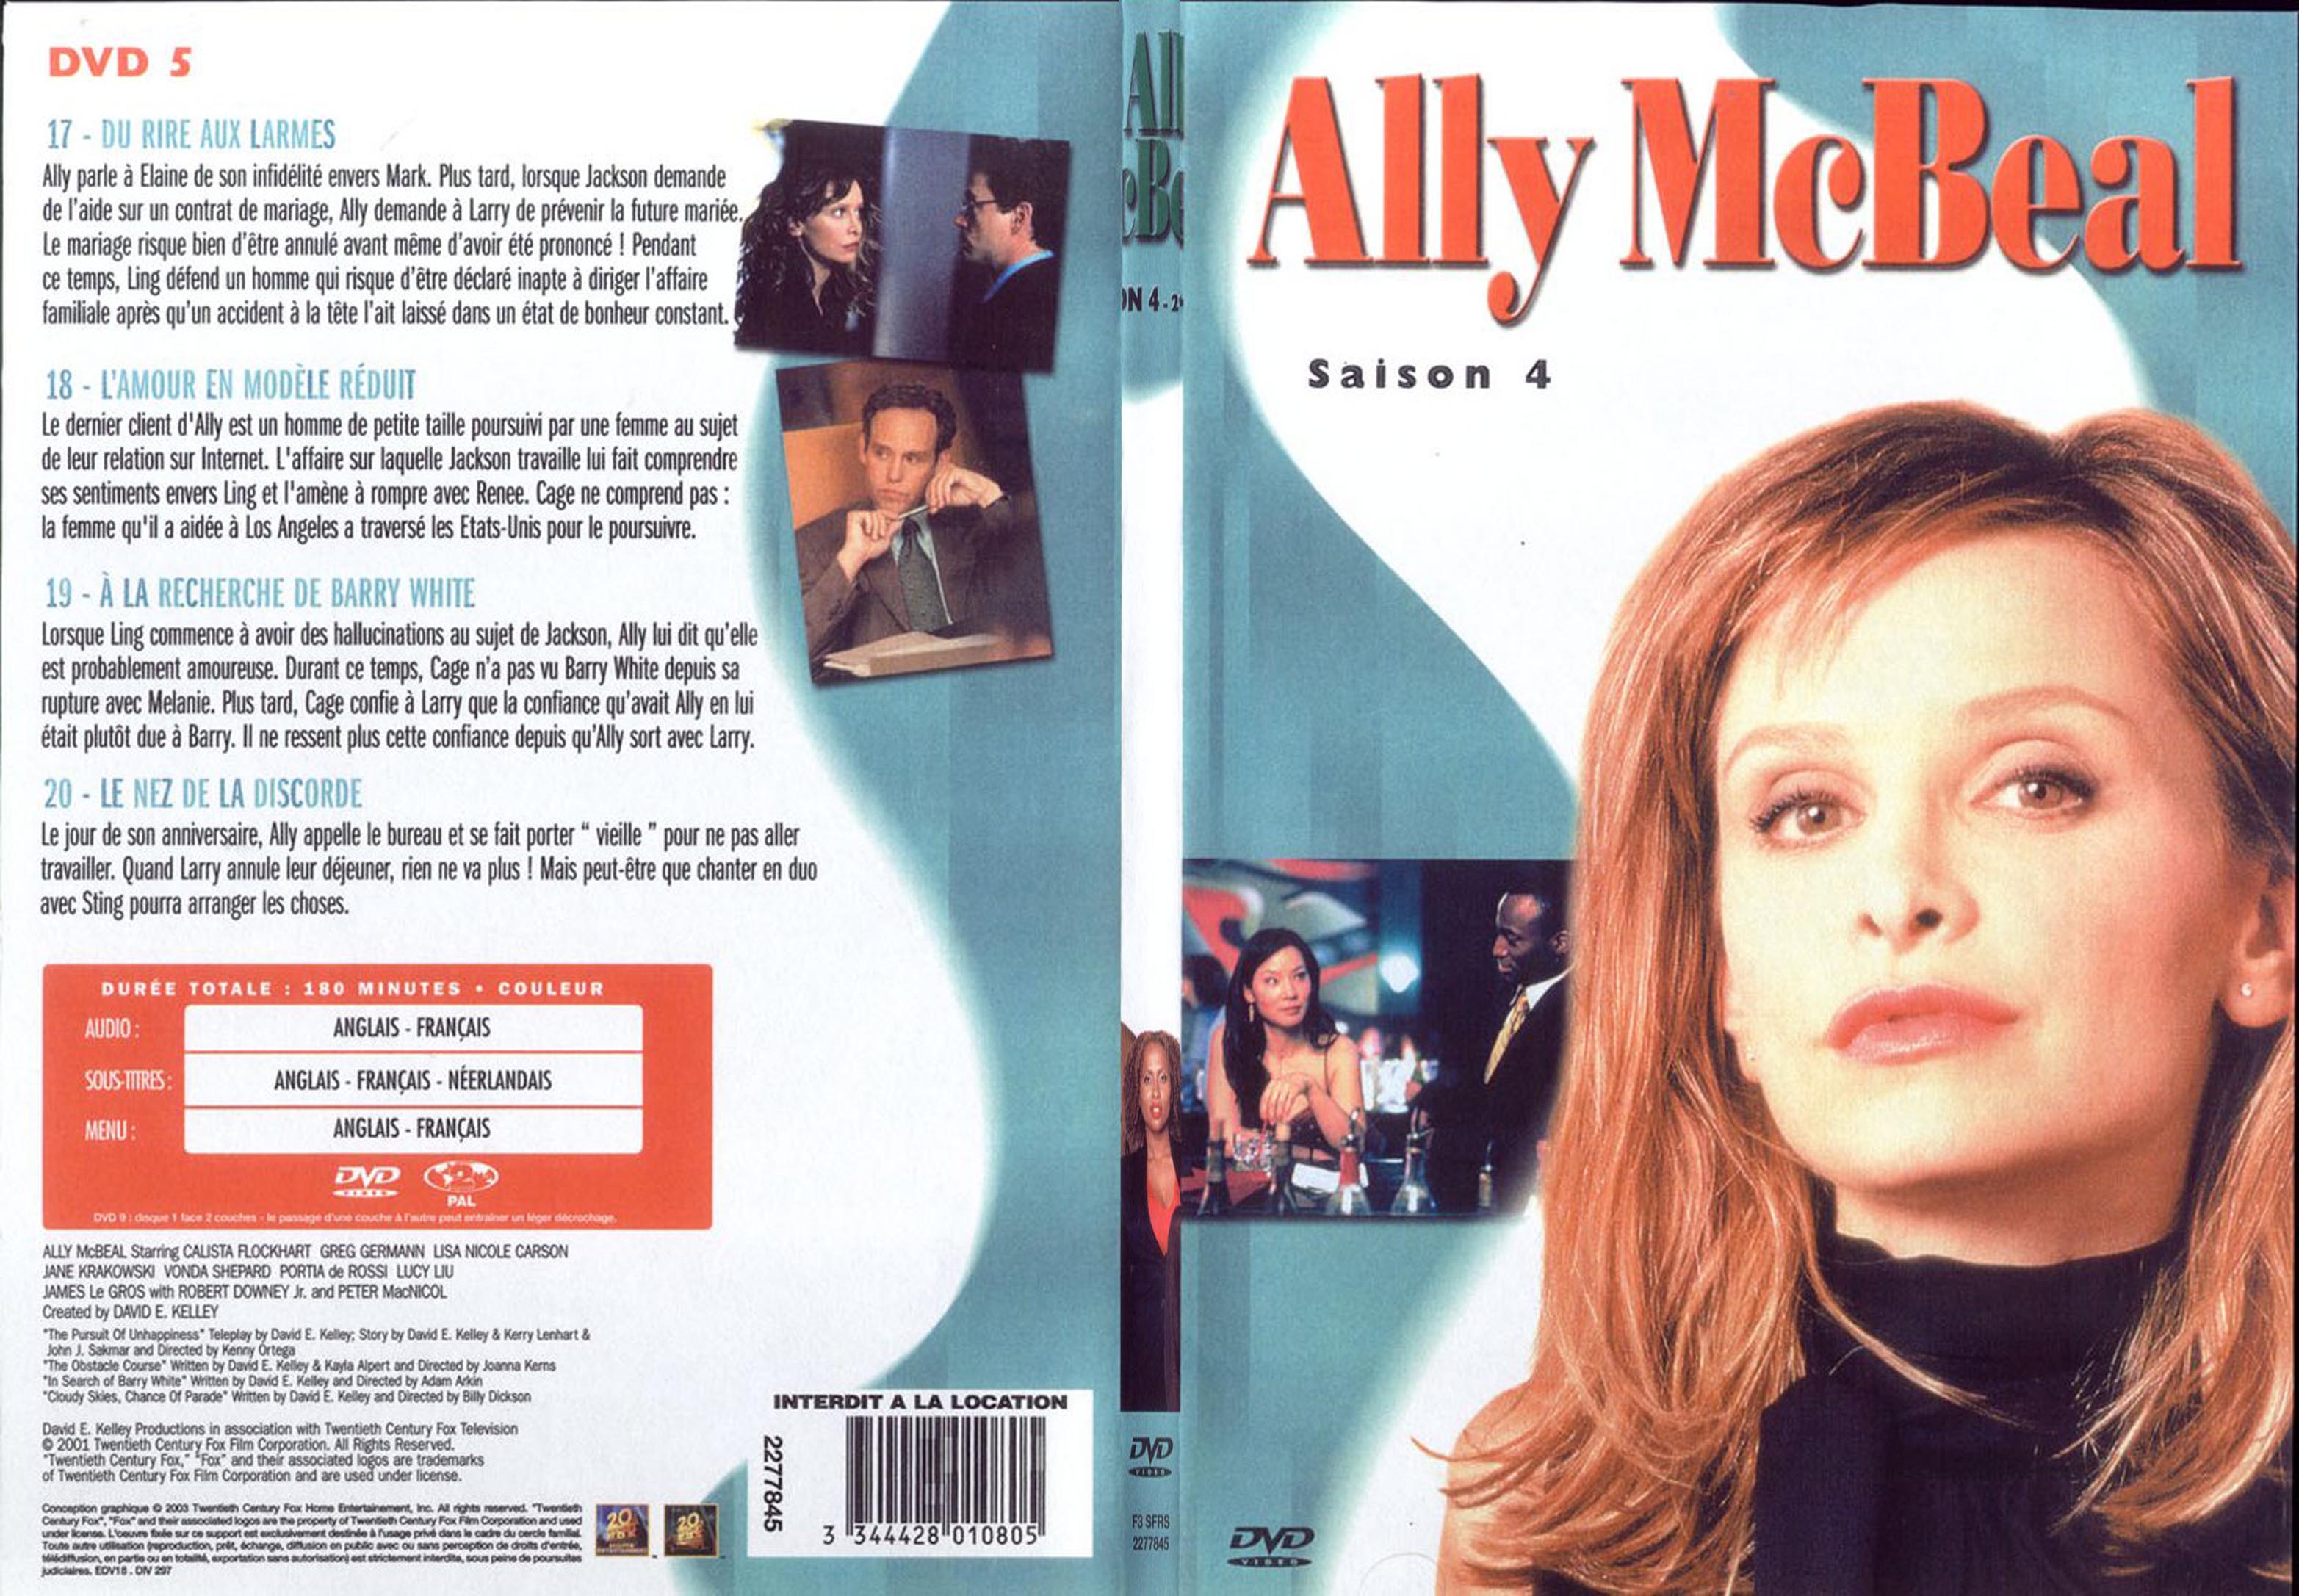 Jaquette DVD Ally McBeal saison 4 dvd 5 - SLIM